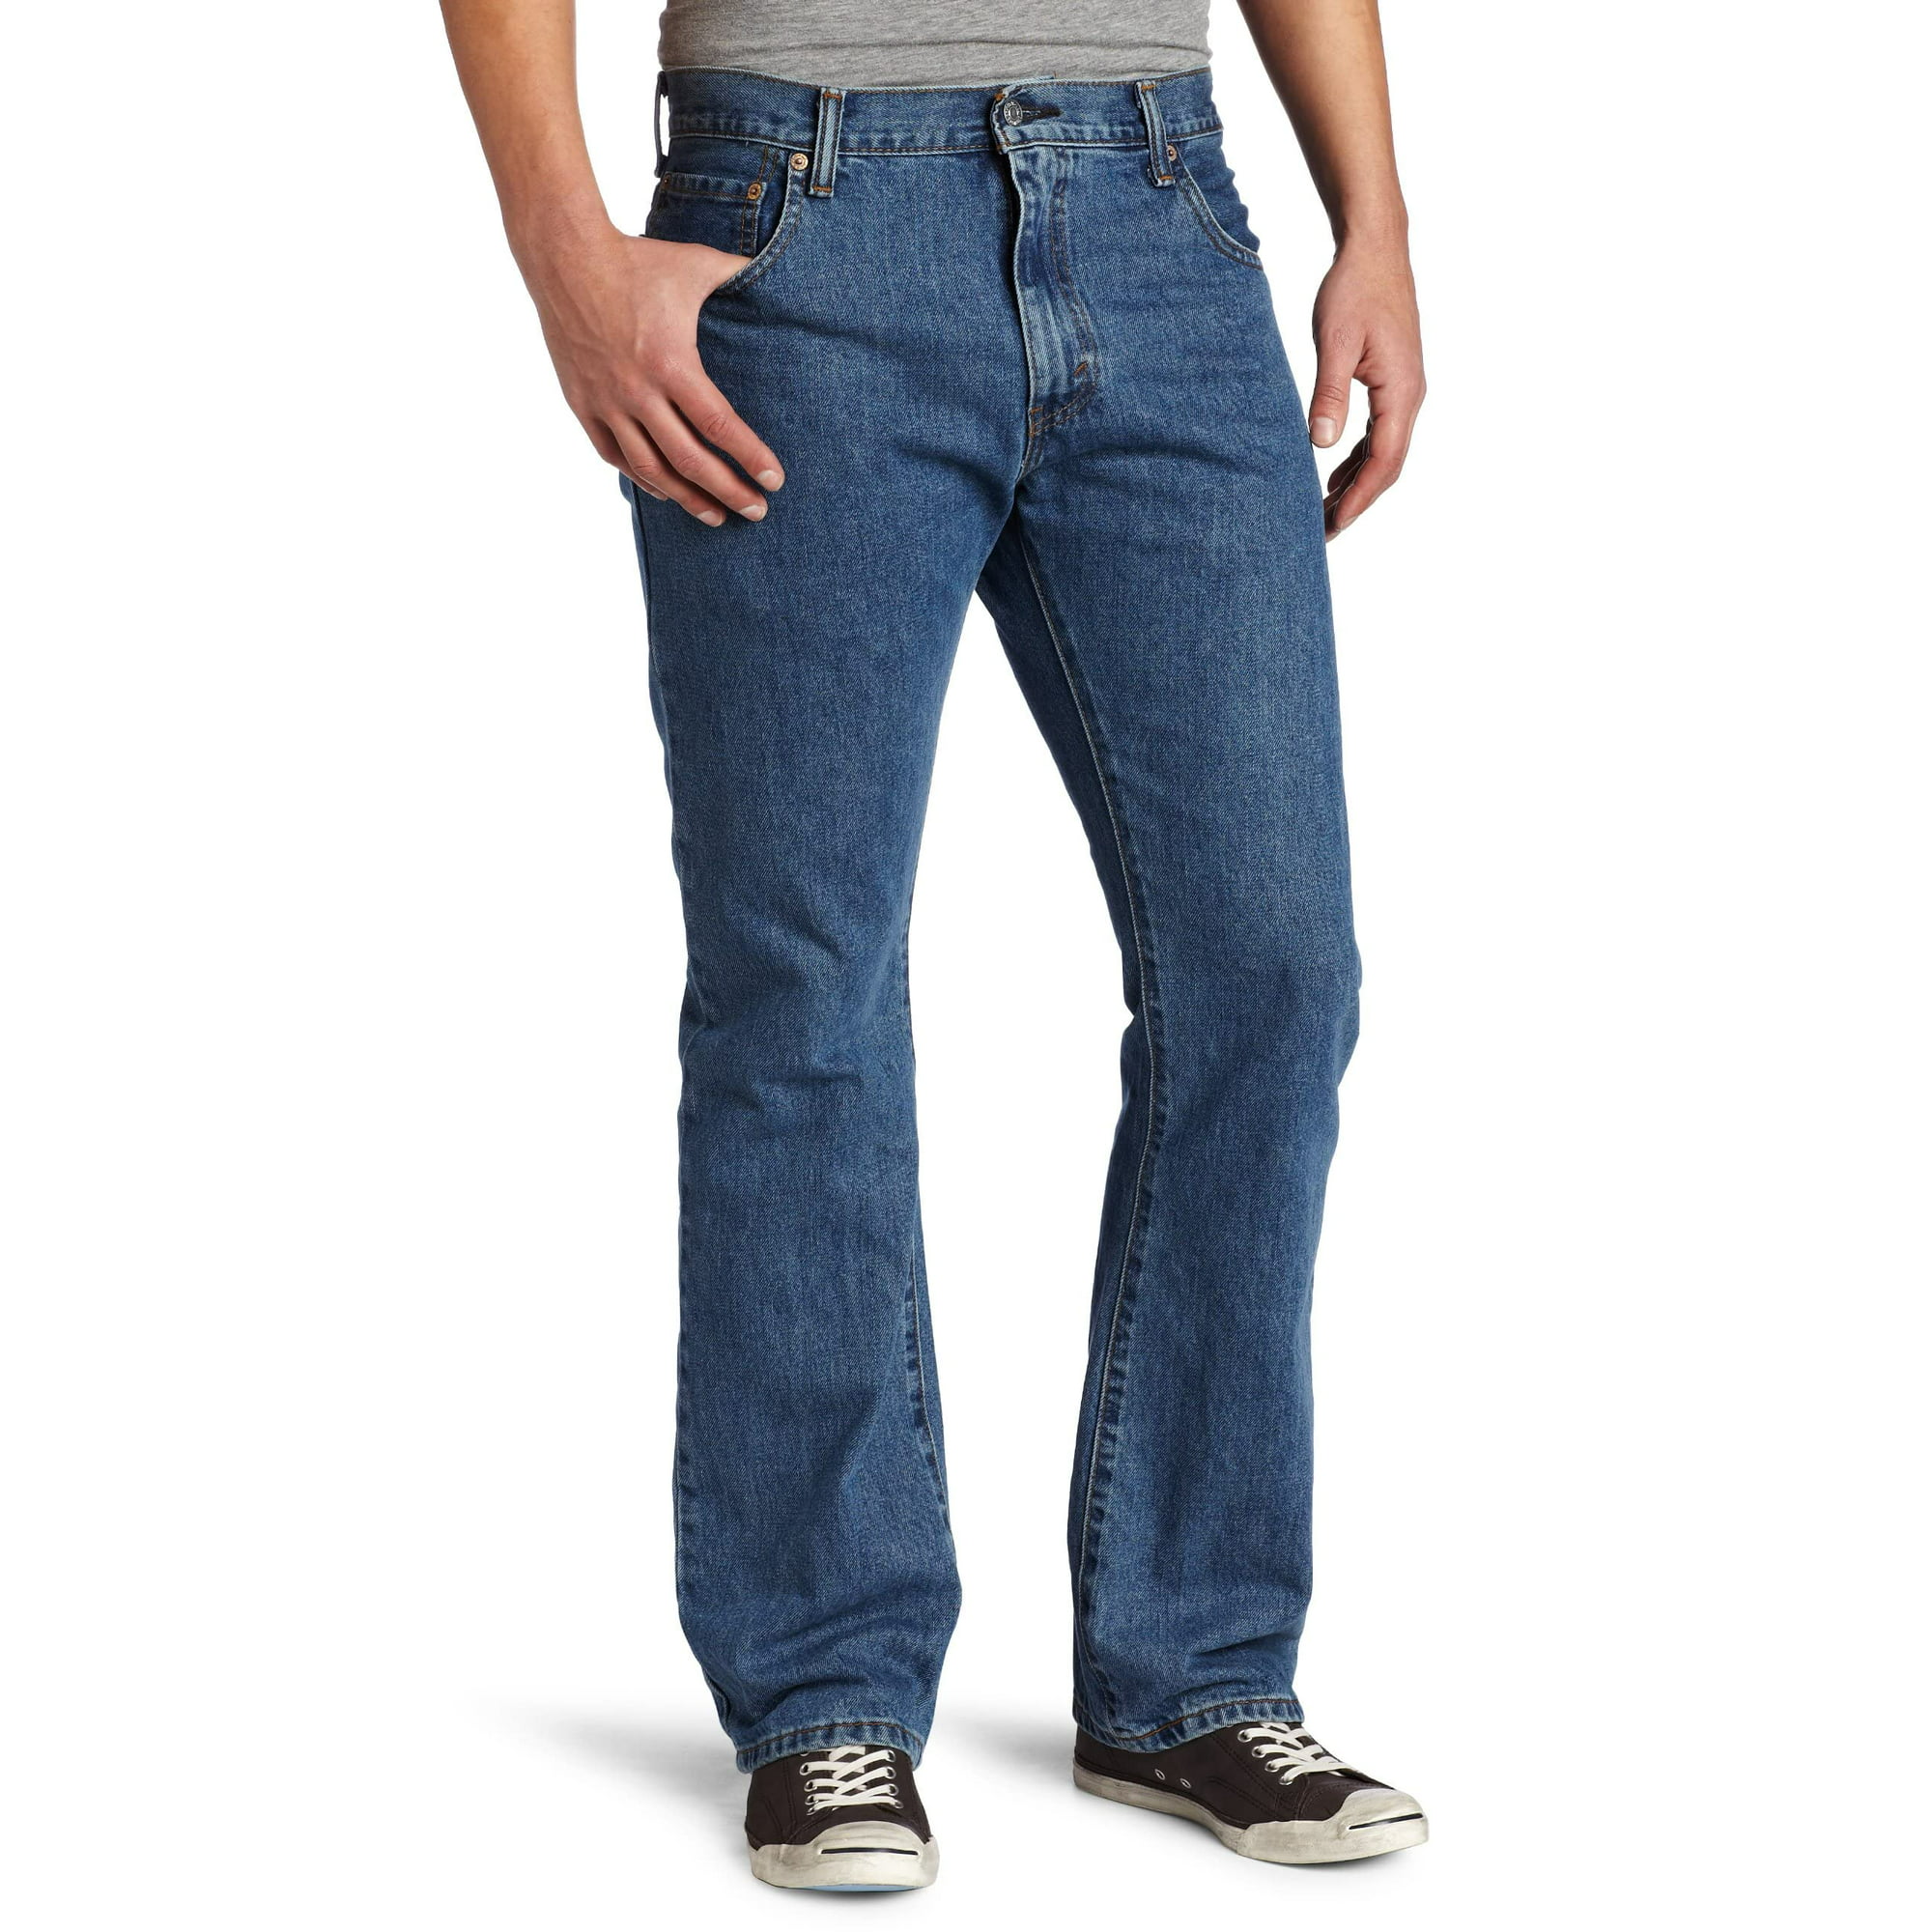 Levi's Men's 517 Boot Cut Jean, Medium Stonewash, 32x30 | Walmart Canada